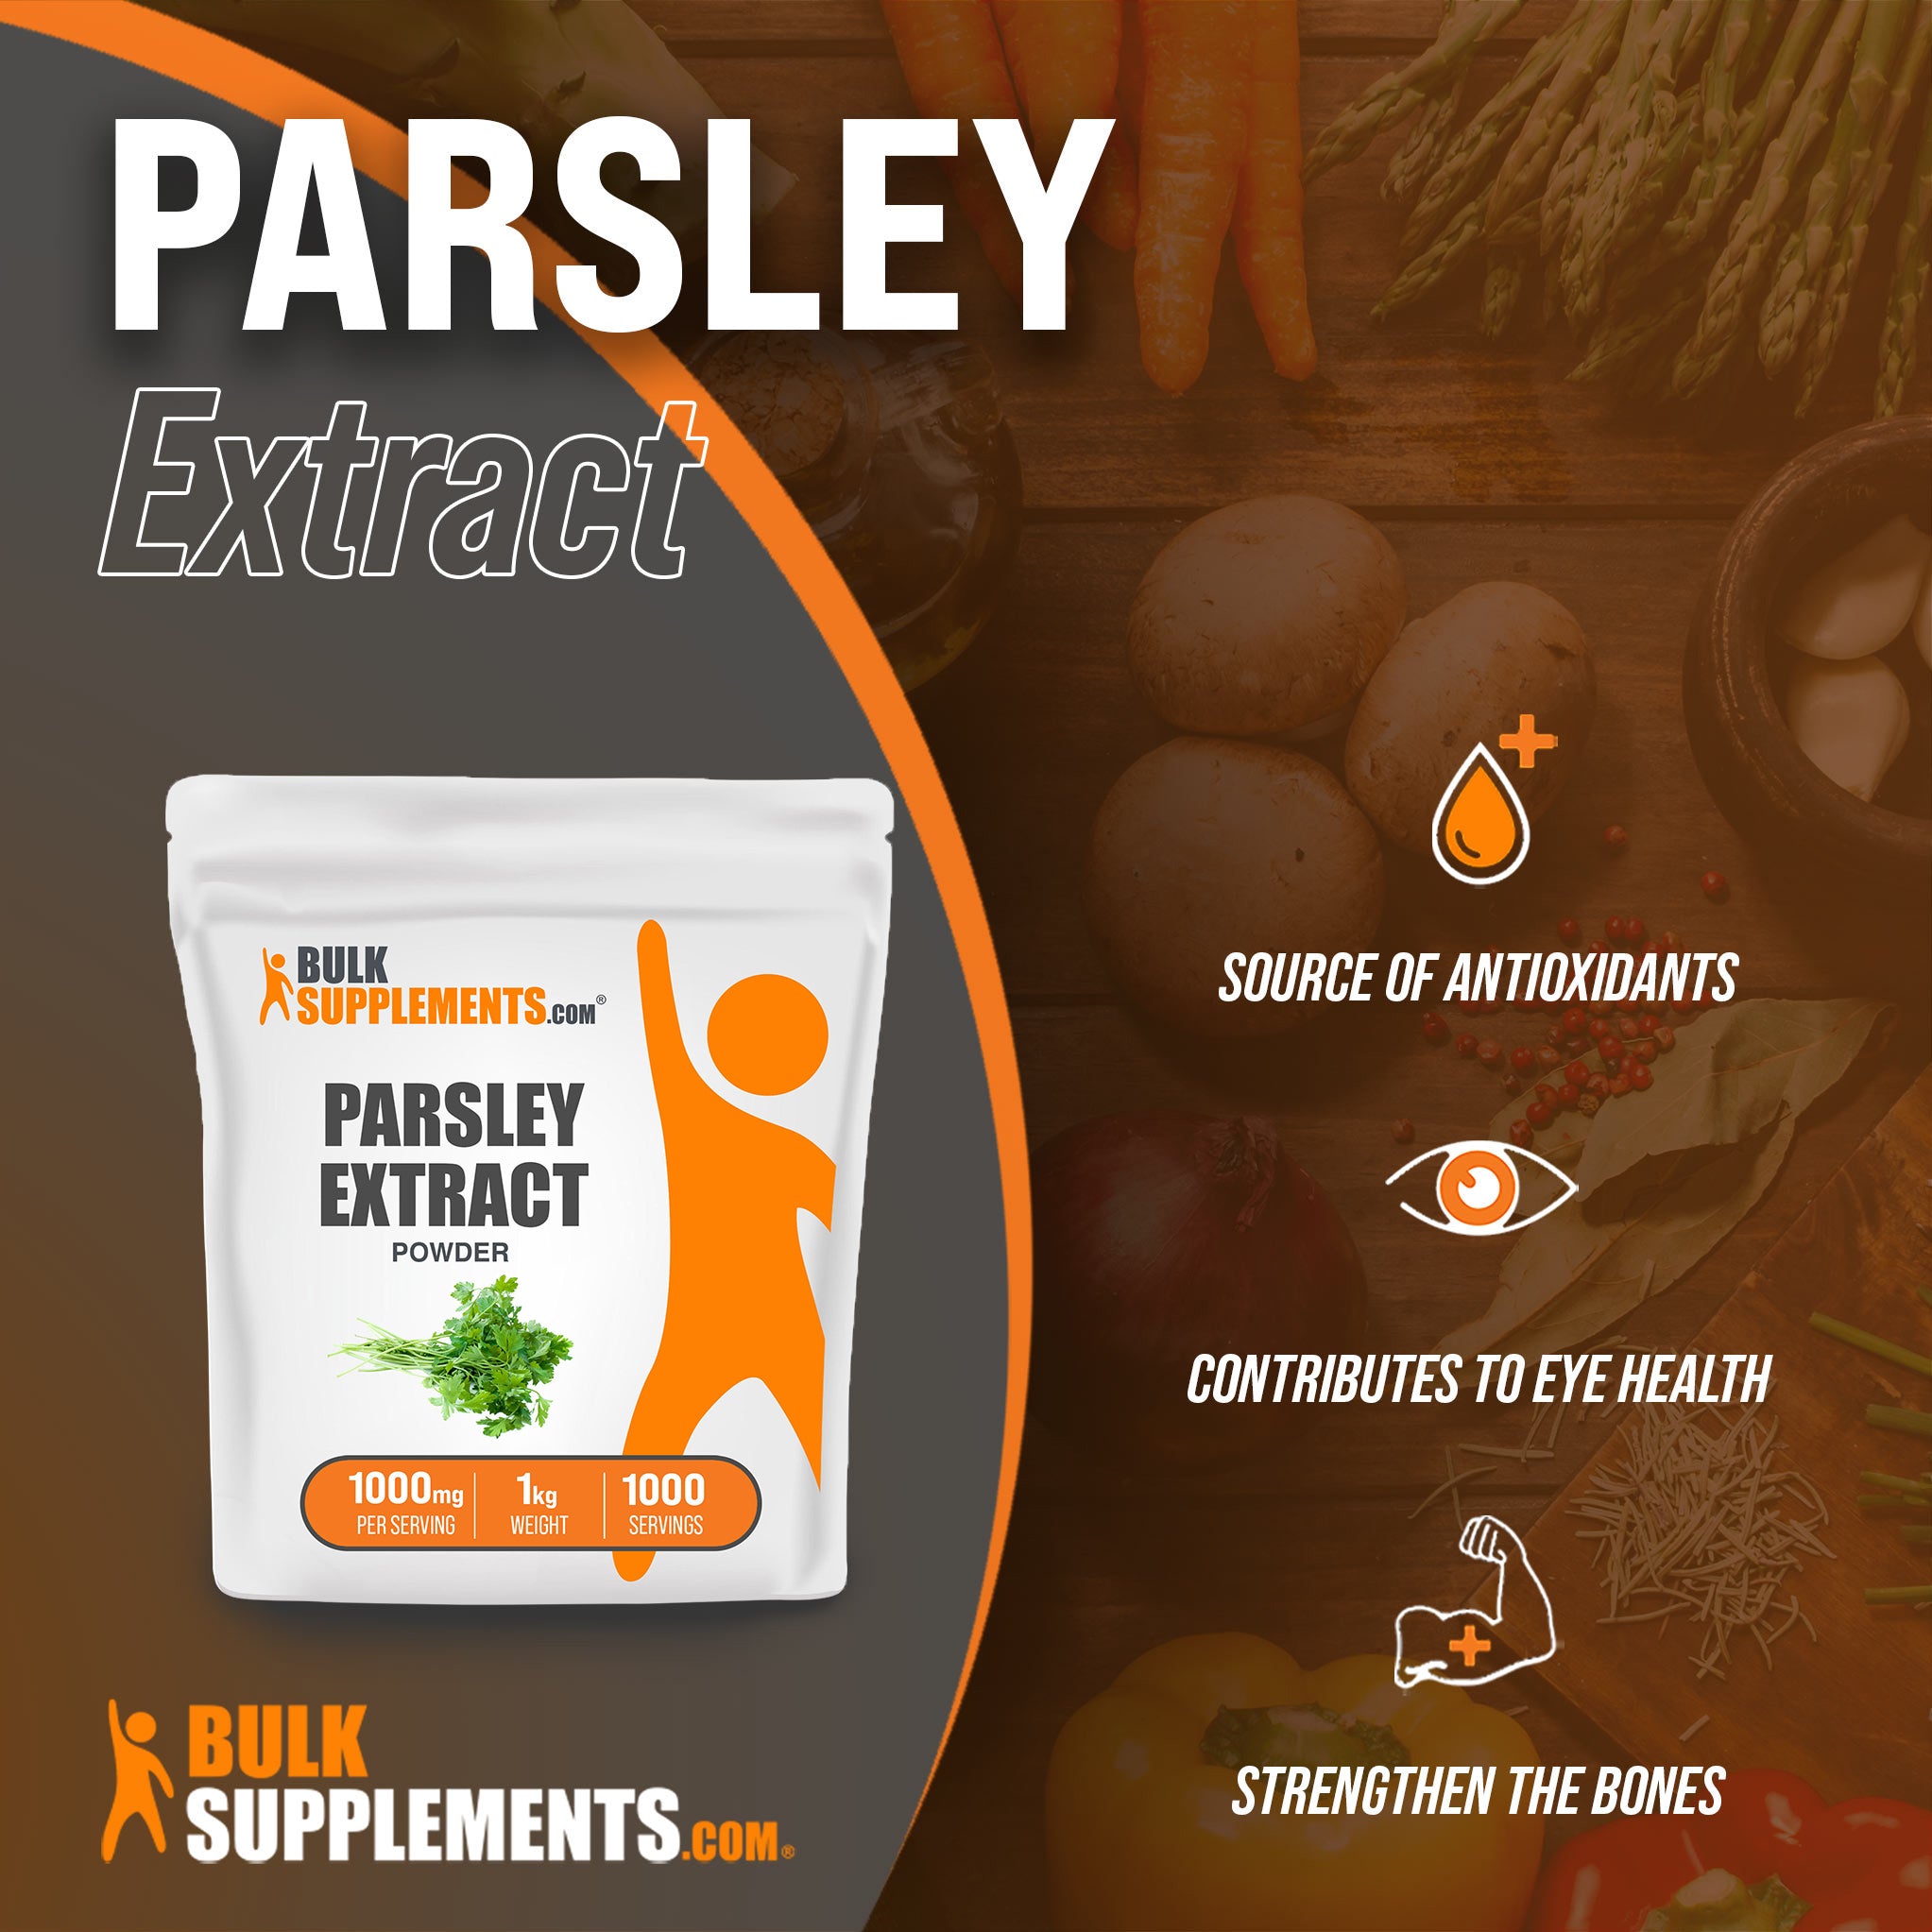 Benefits of Parsley Extract: source of antioxidants, contributes to eye health, strengthen the bones